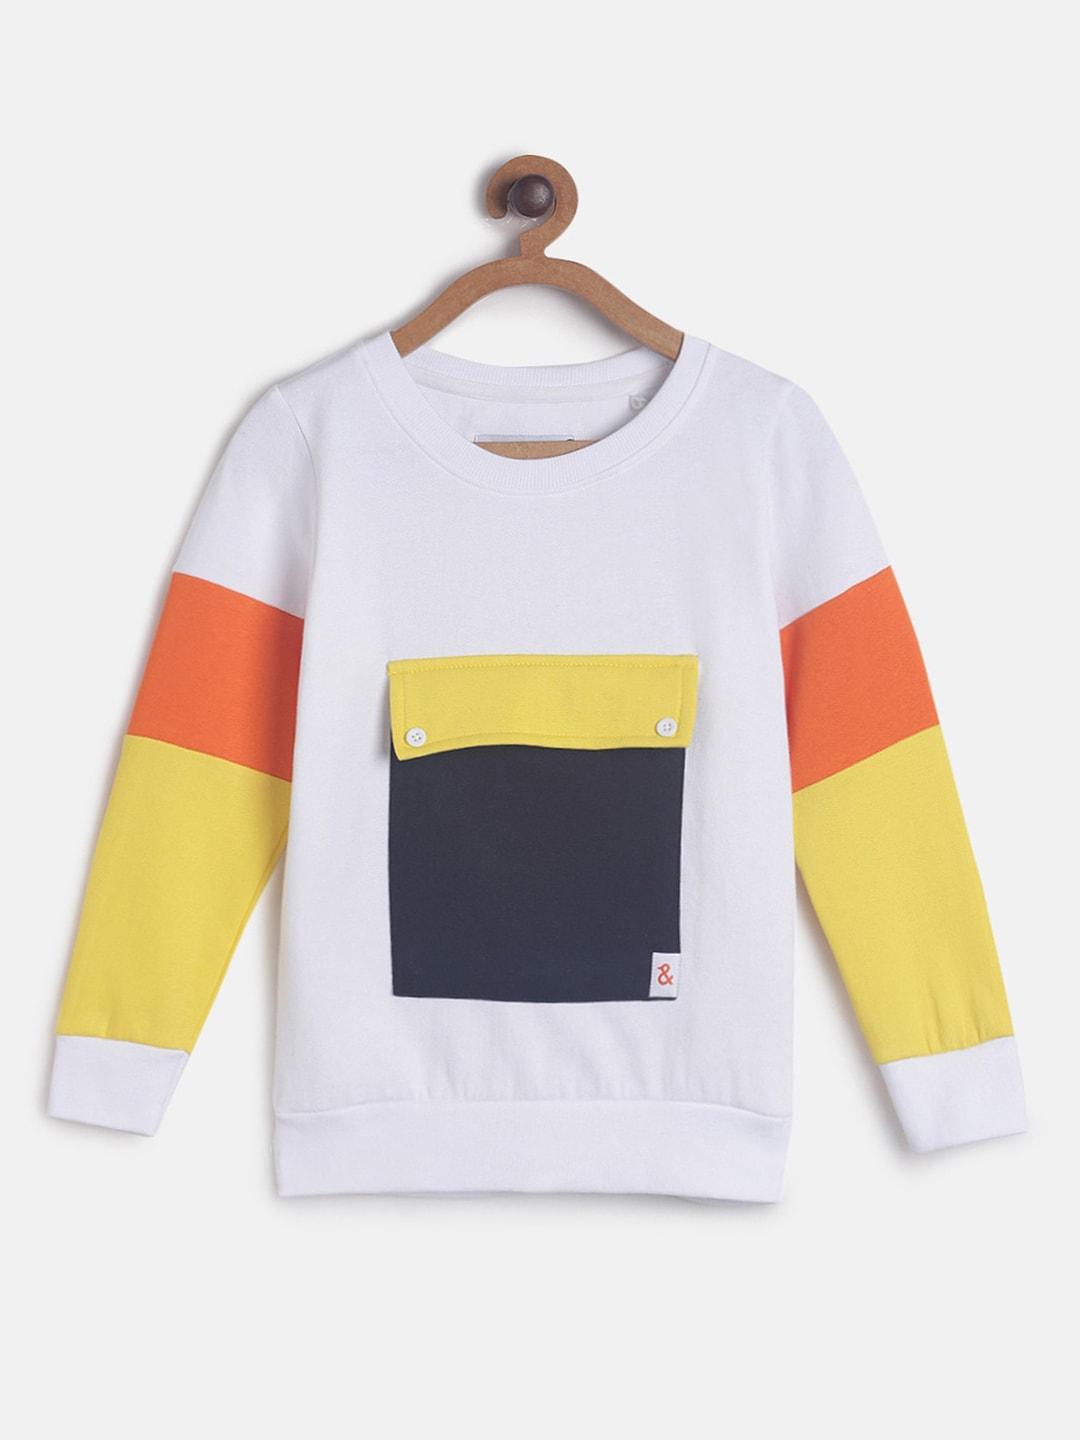 TALES & STORIES Boys White & Yellow Colourblocked Sweatshirt